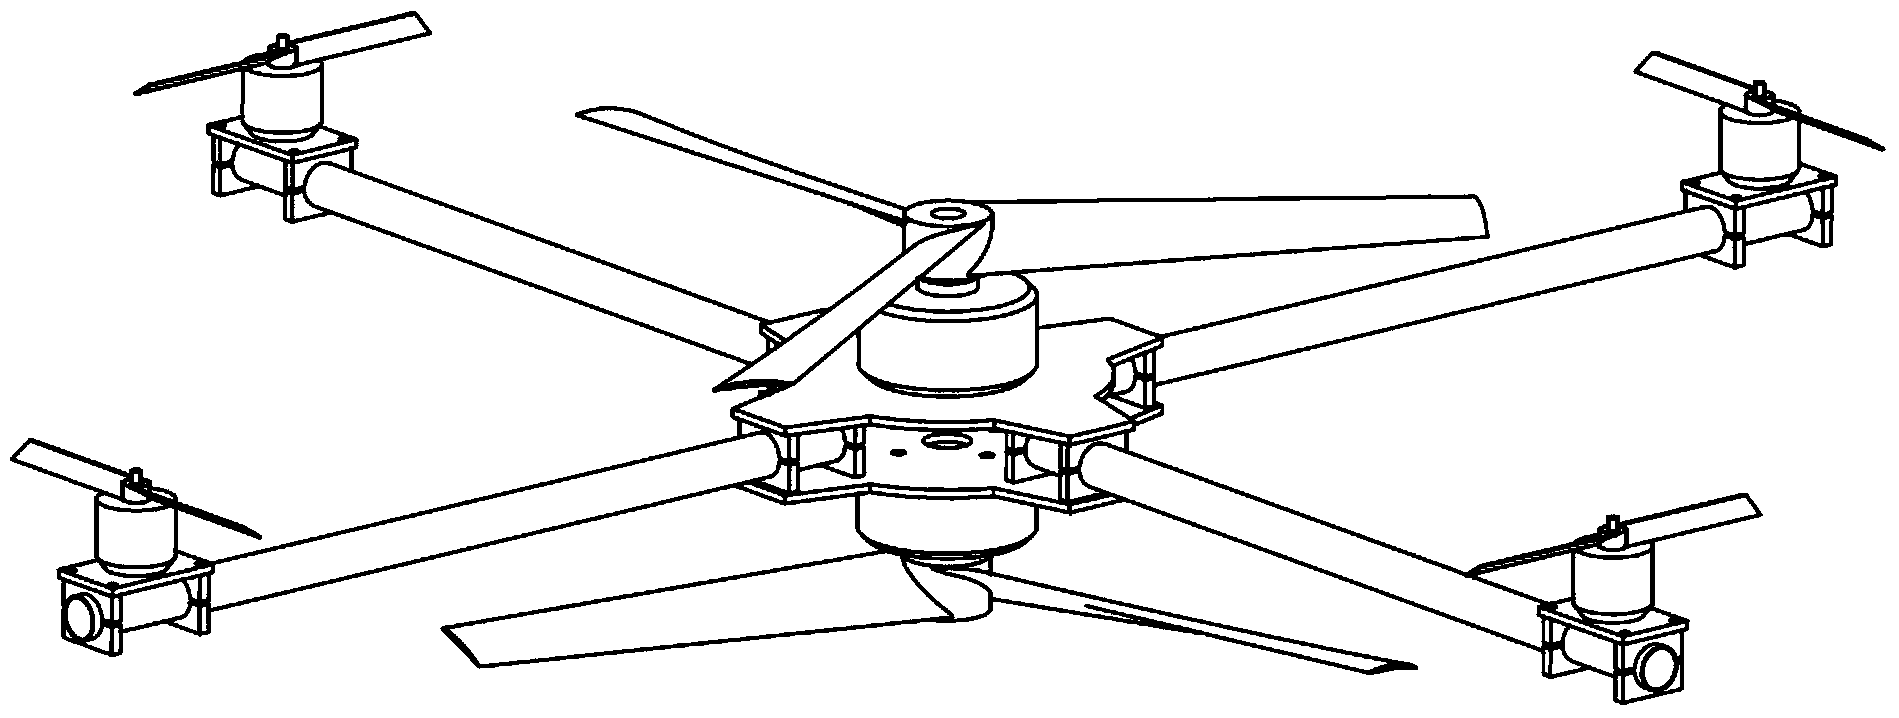 Multi-rotor type aircraft